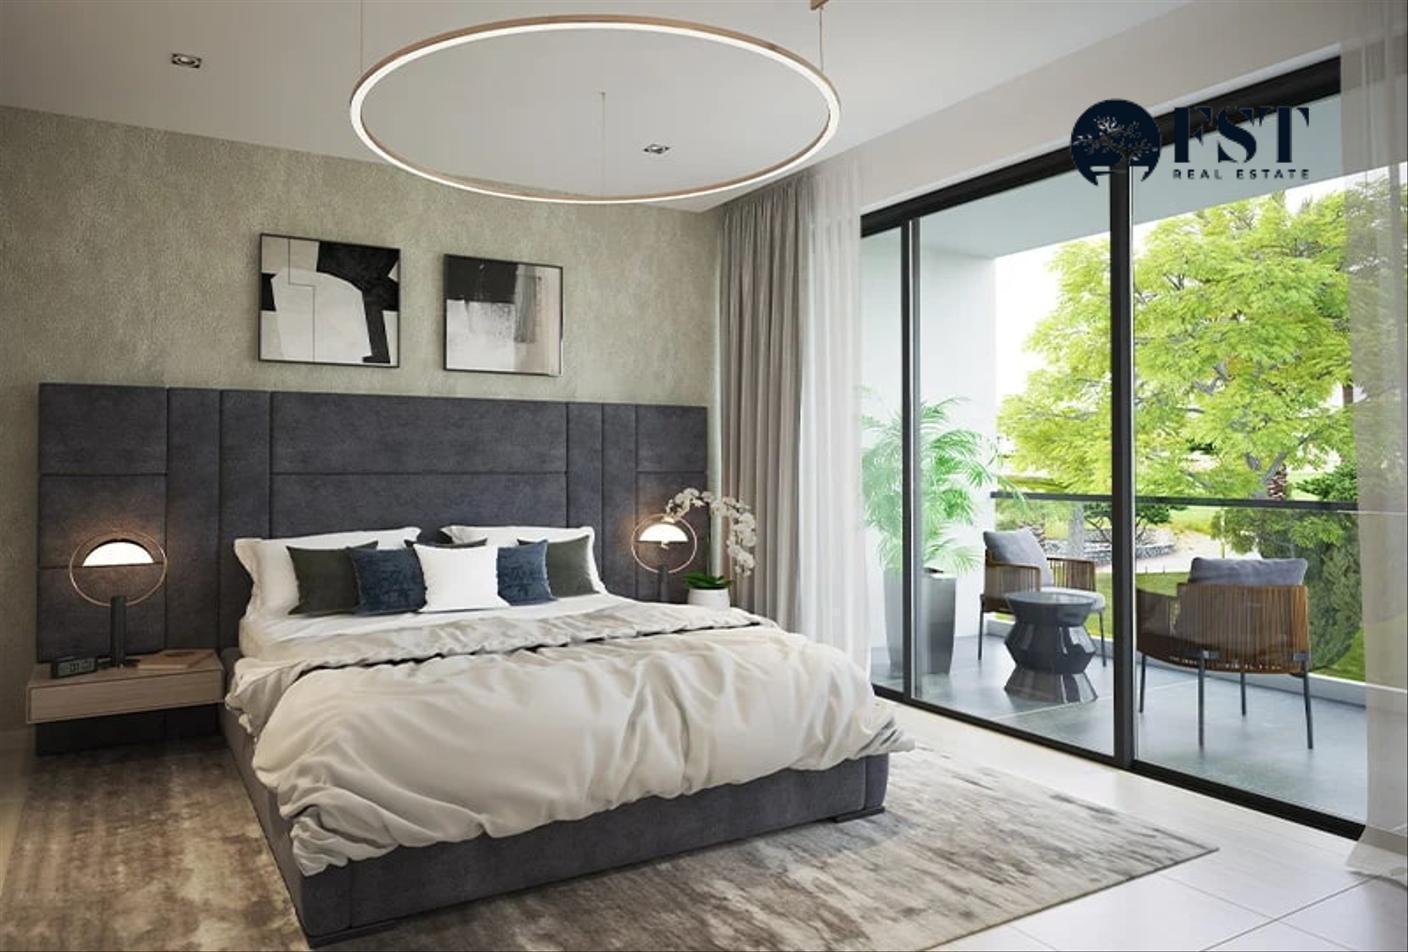 5 bed, 6 bath Villa for sale in Belair Damac Hills - By Trump Estates, DAMAC Hills, Dubai for price AED 3360000 